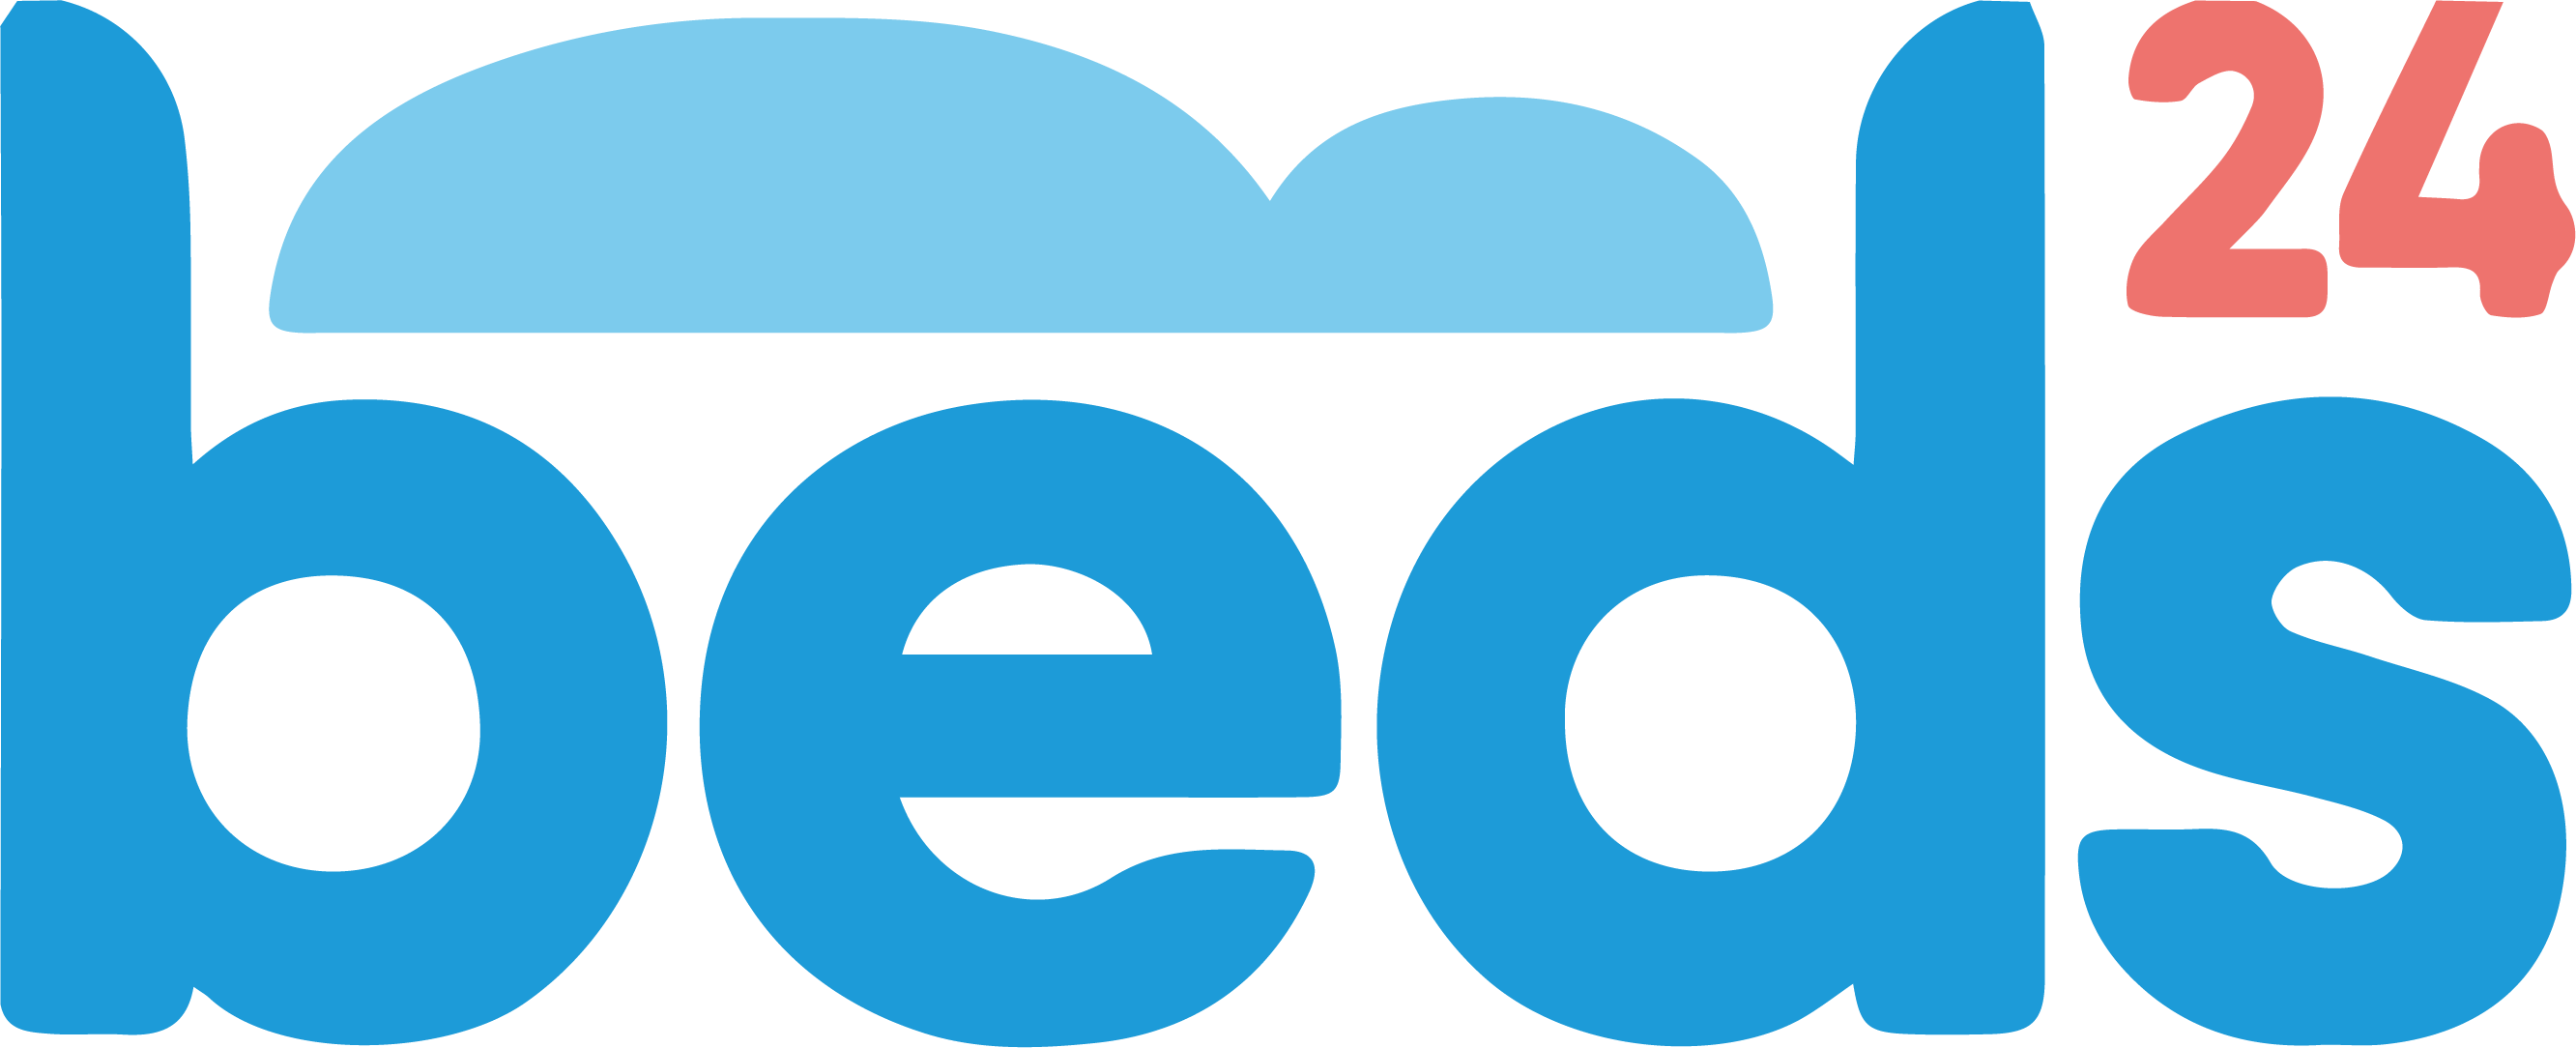 Logotipo de Beds24